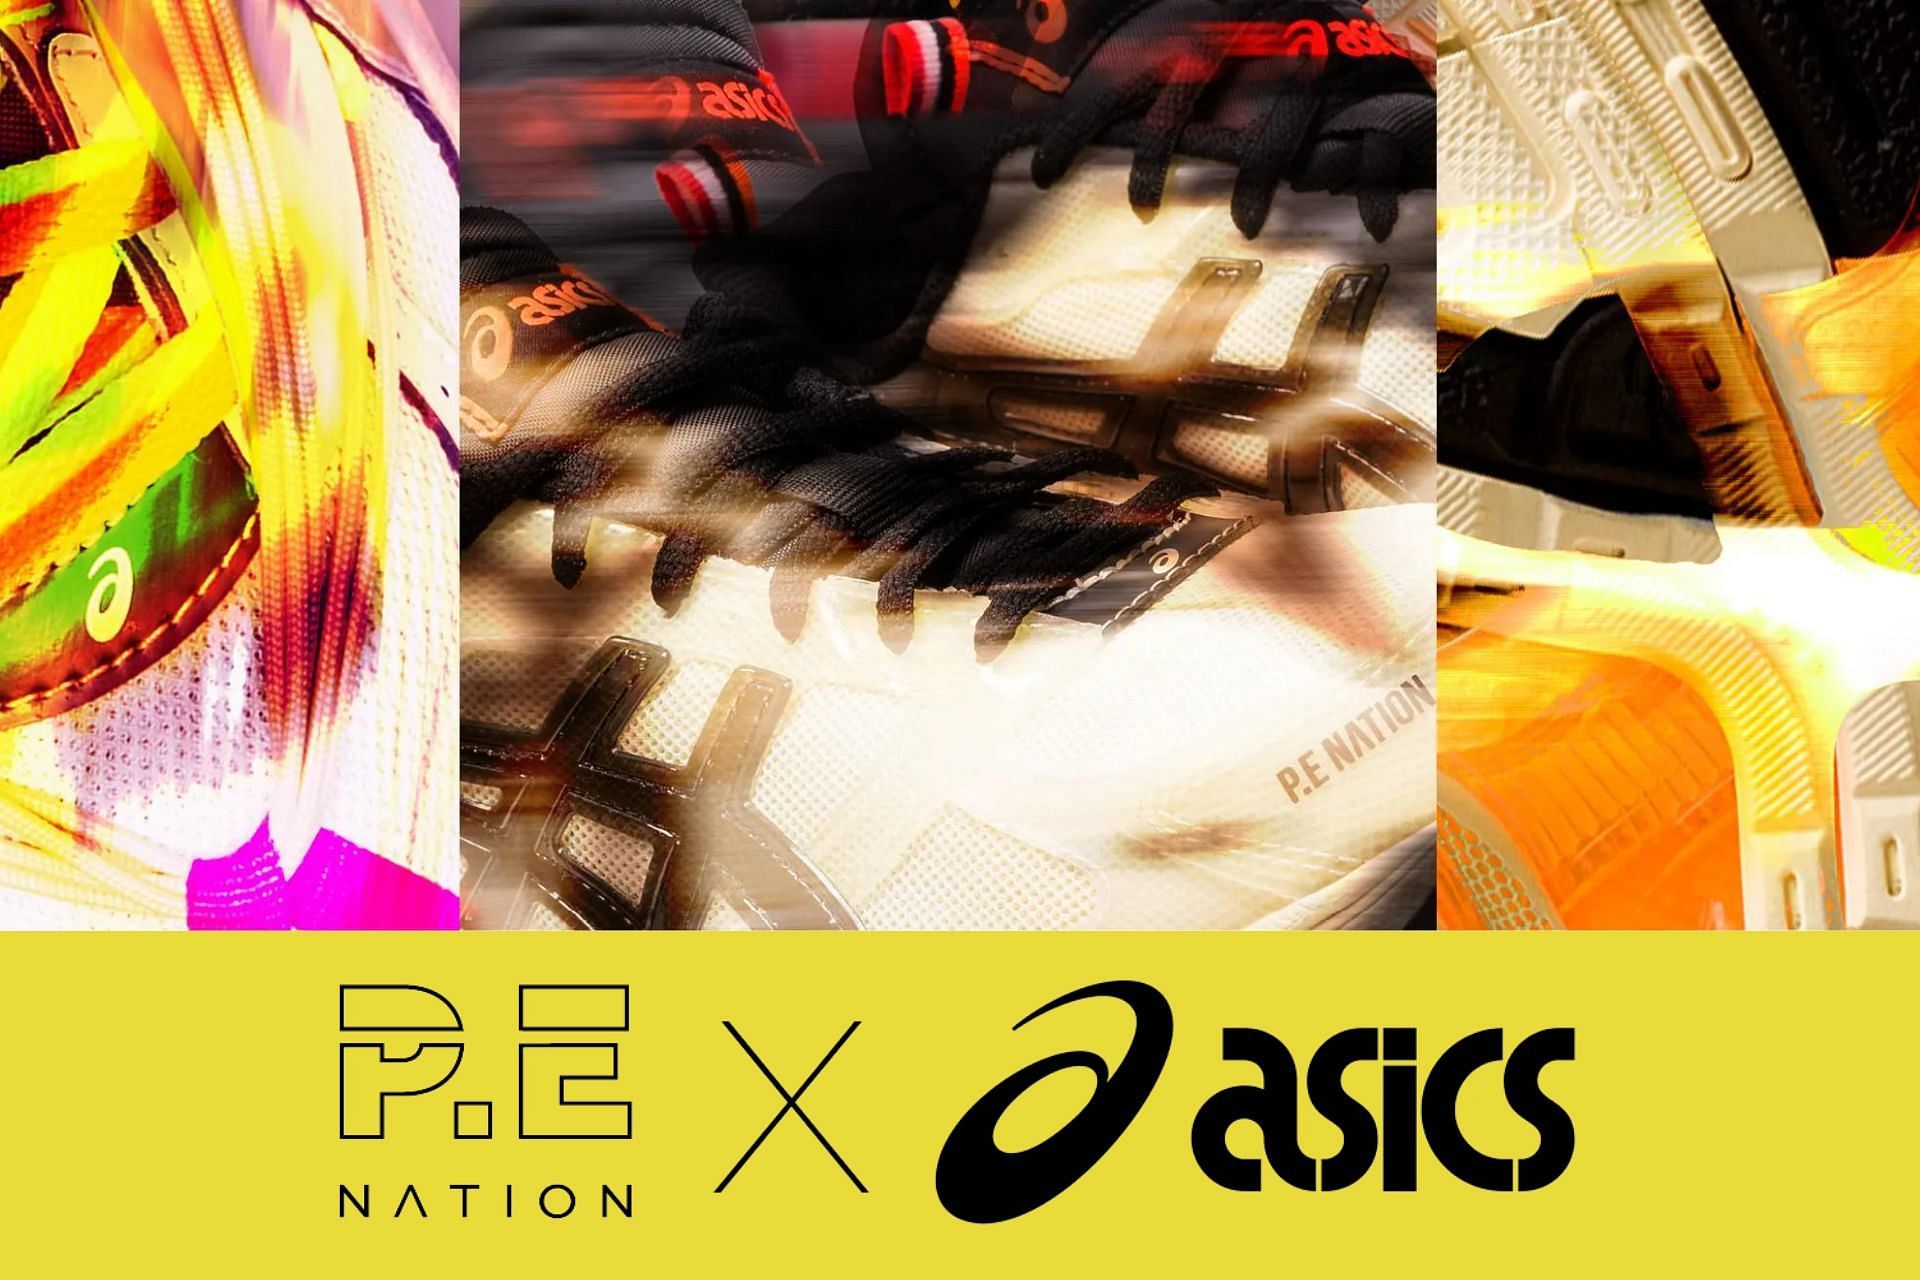 P.E. Nation x Asics sneaker collaboration (Image via P.E. Nation)